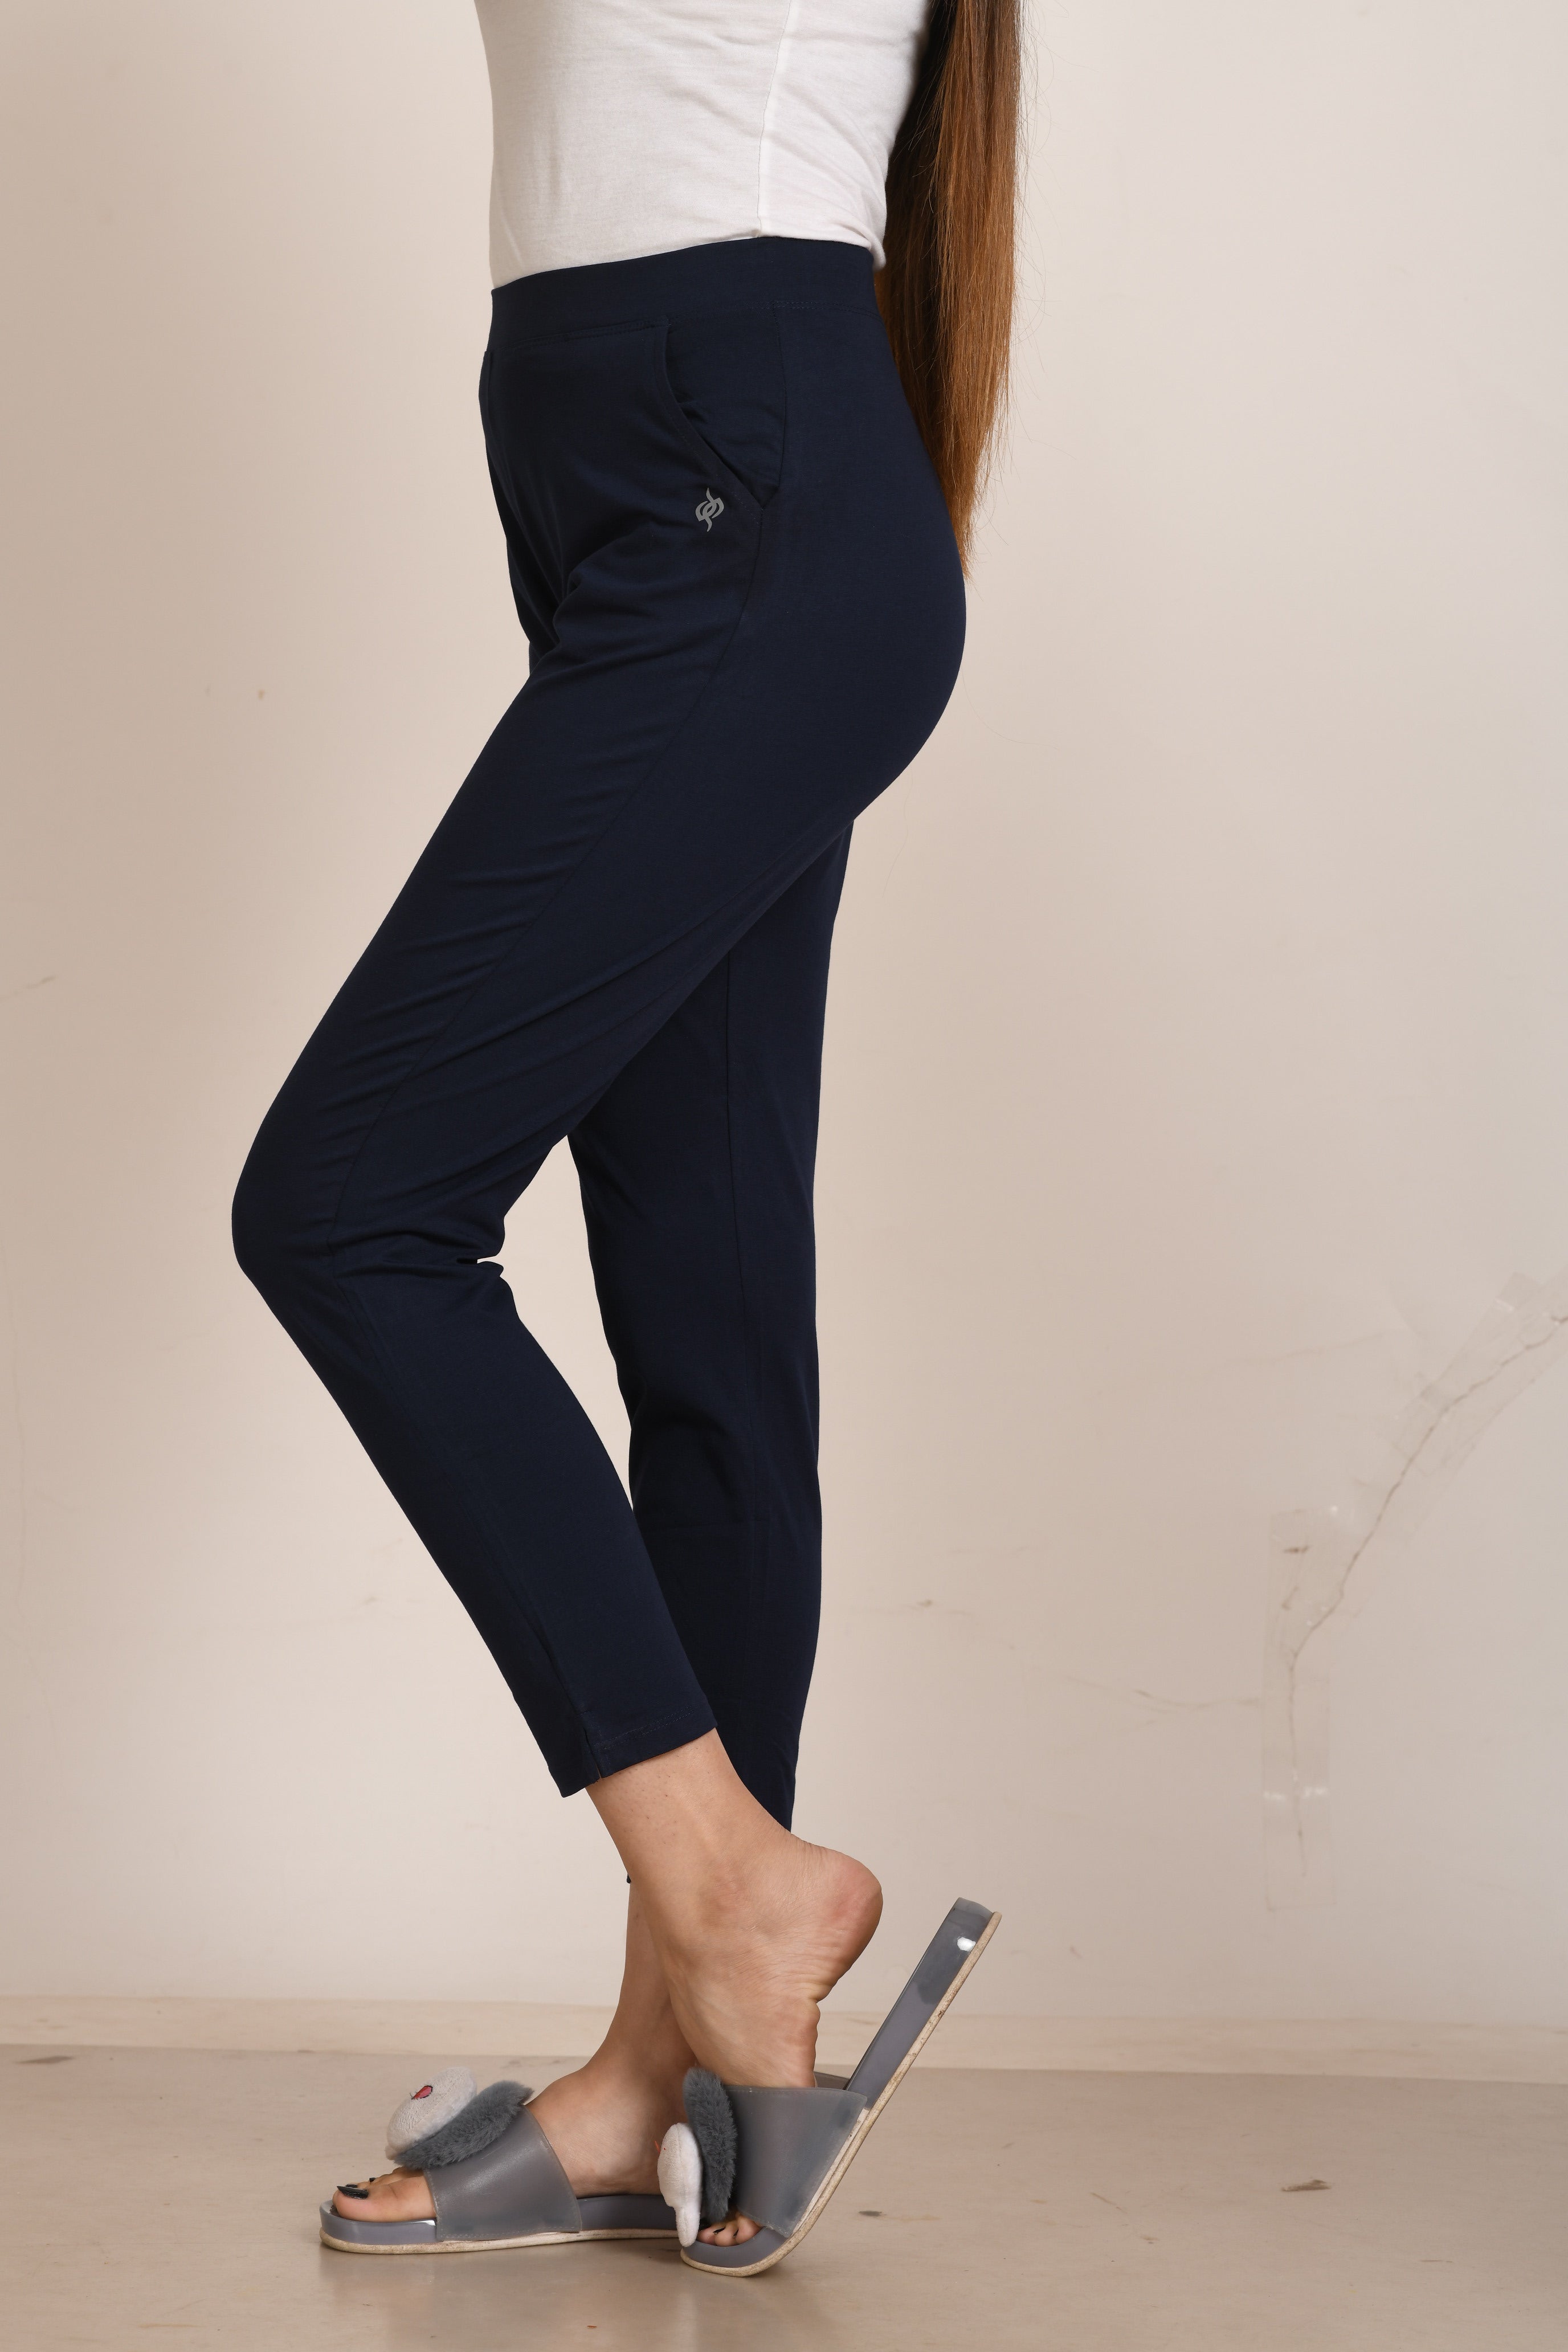 Buy Deepee Twister Knit Pants - Yoga Pants, Kurti Pants, Leisure